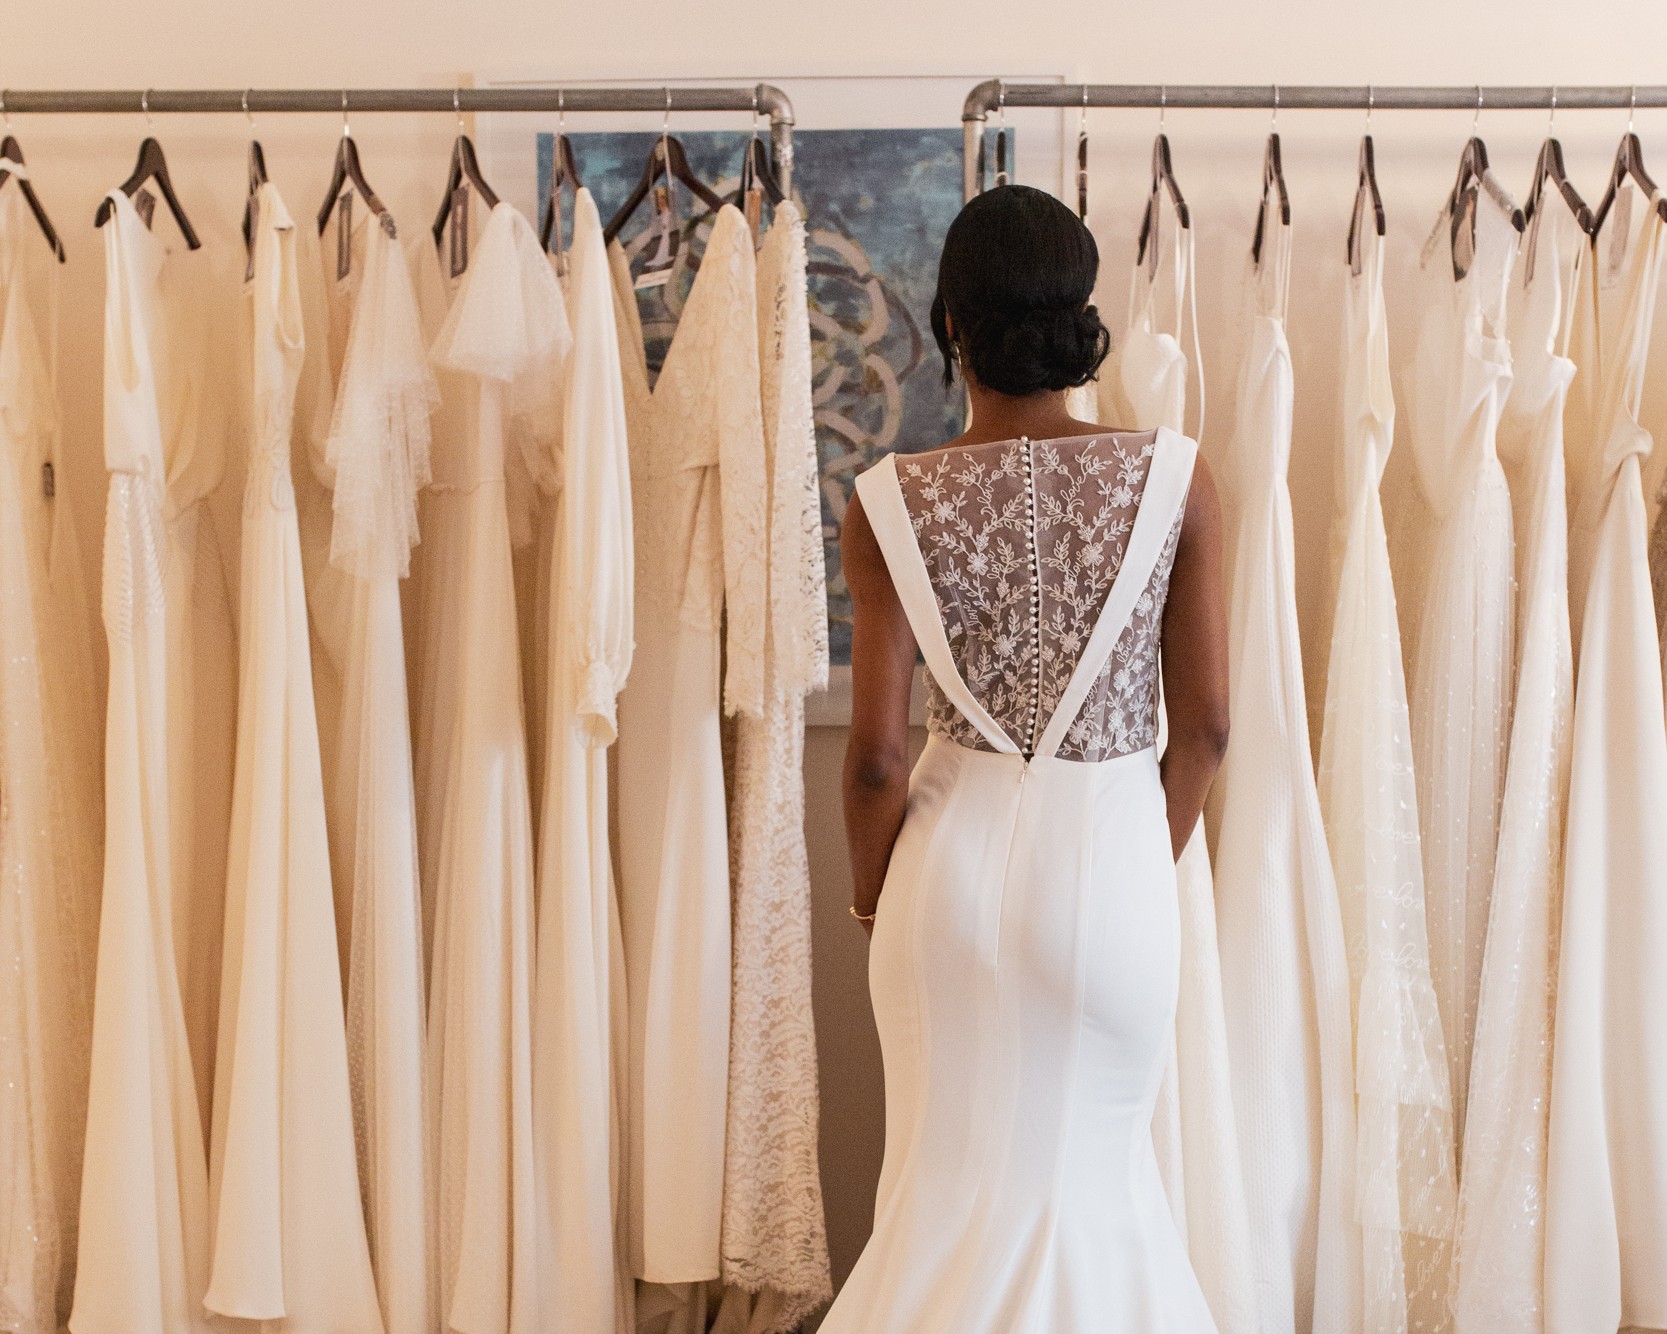 Model wears Edith Elan Jane wedding dress style while standing in front of dress racks